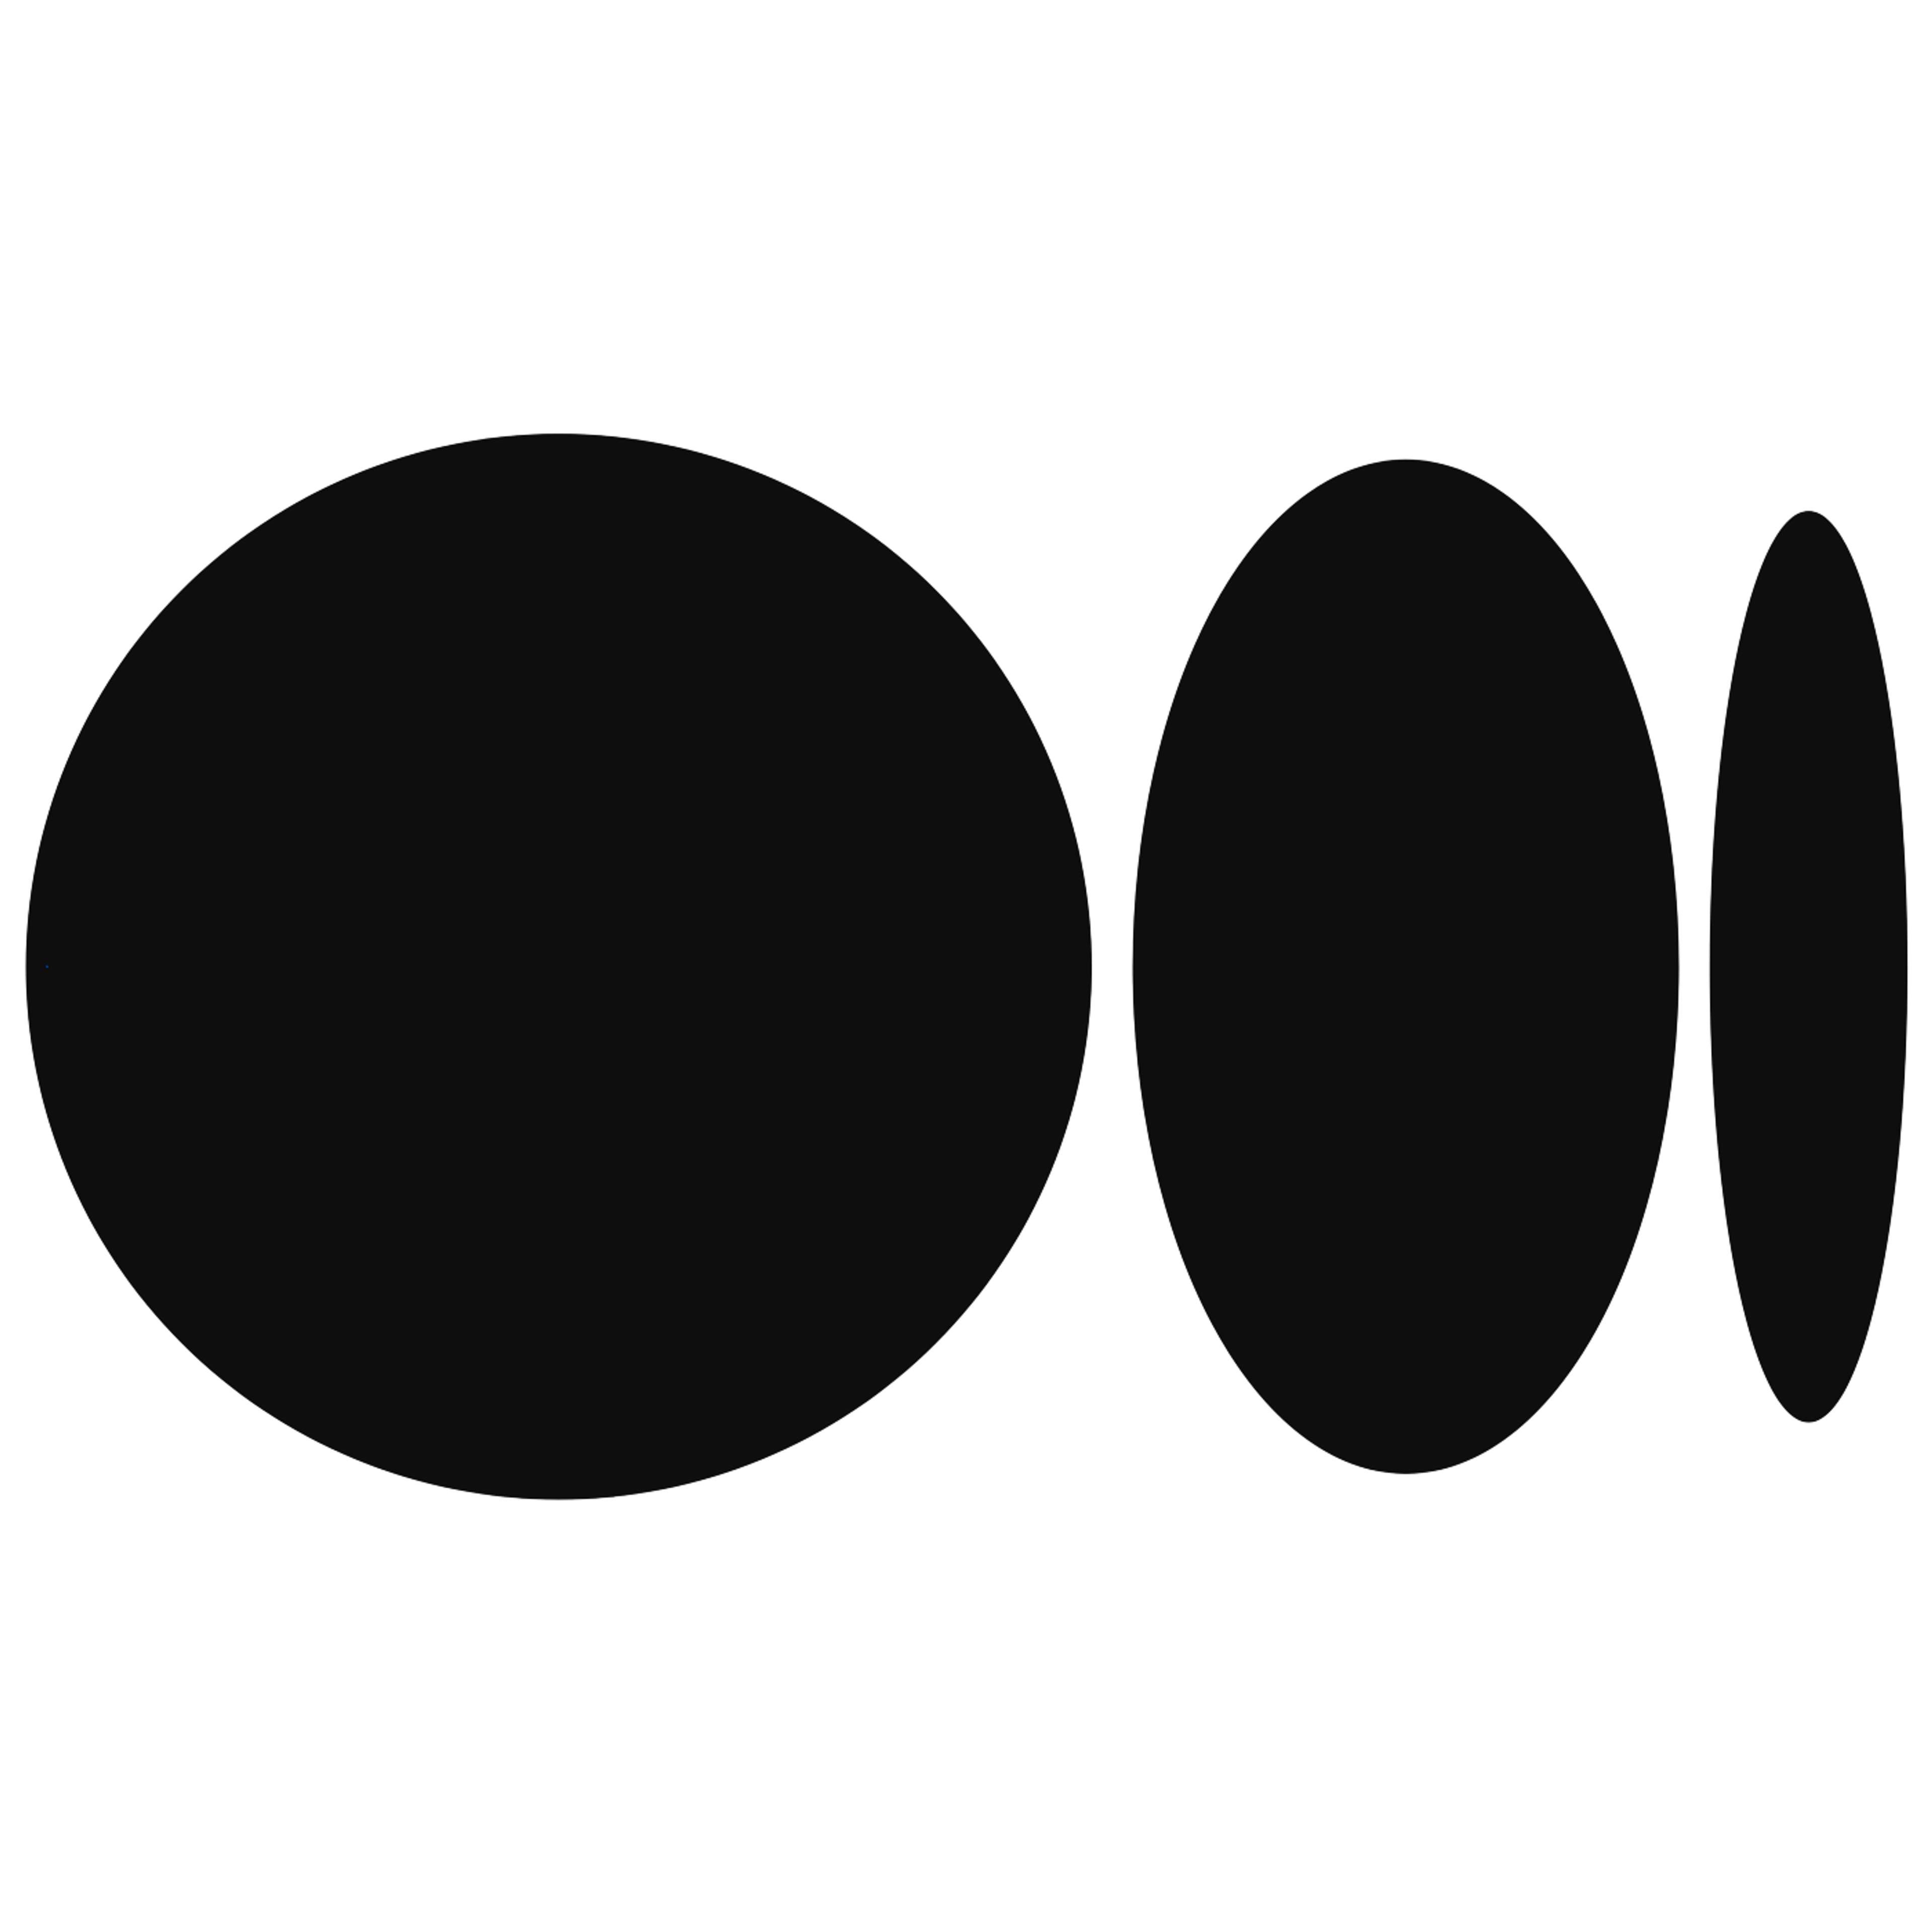 Article logo image